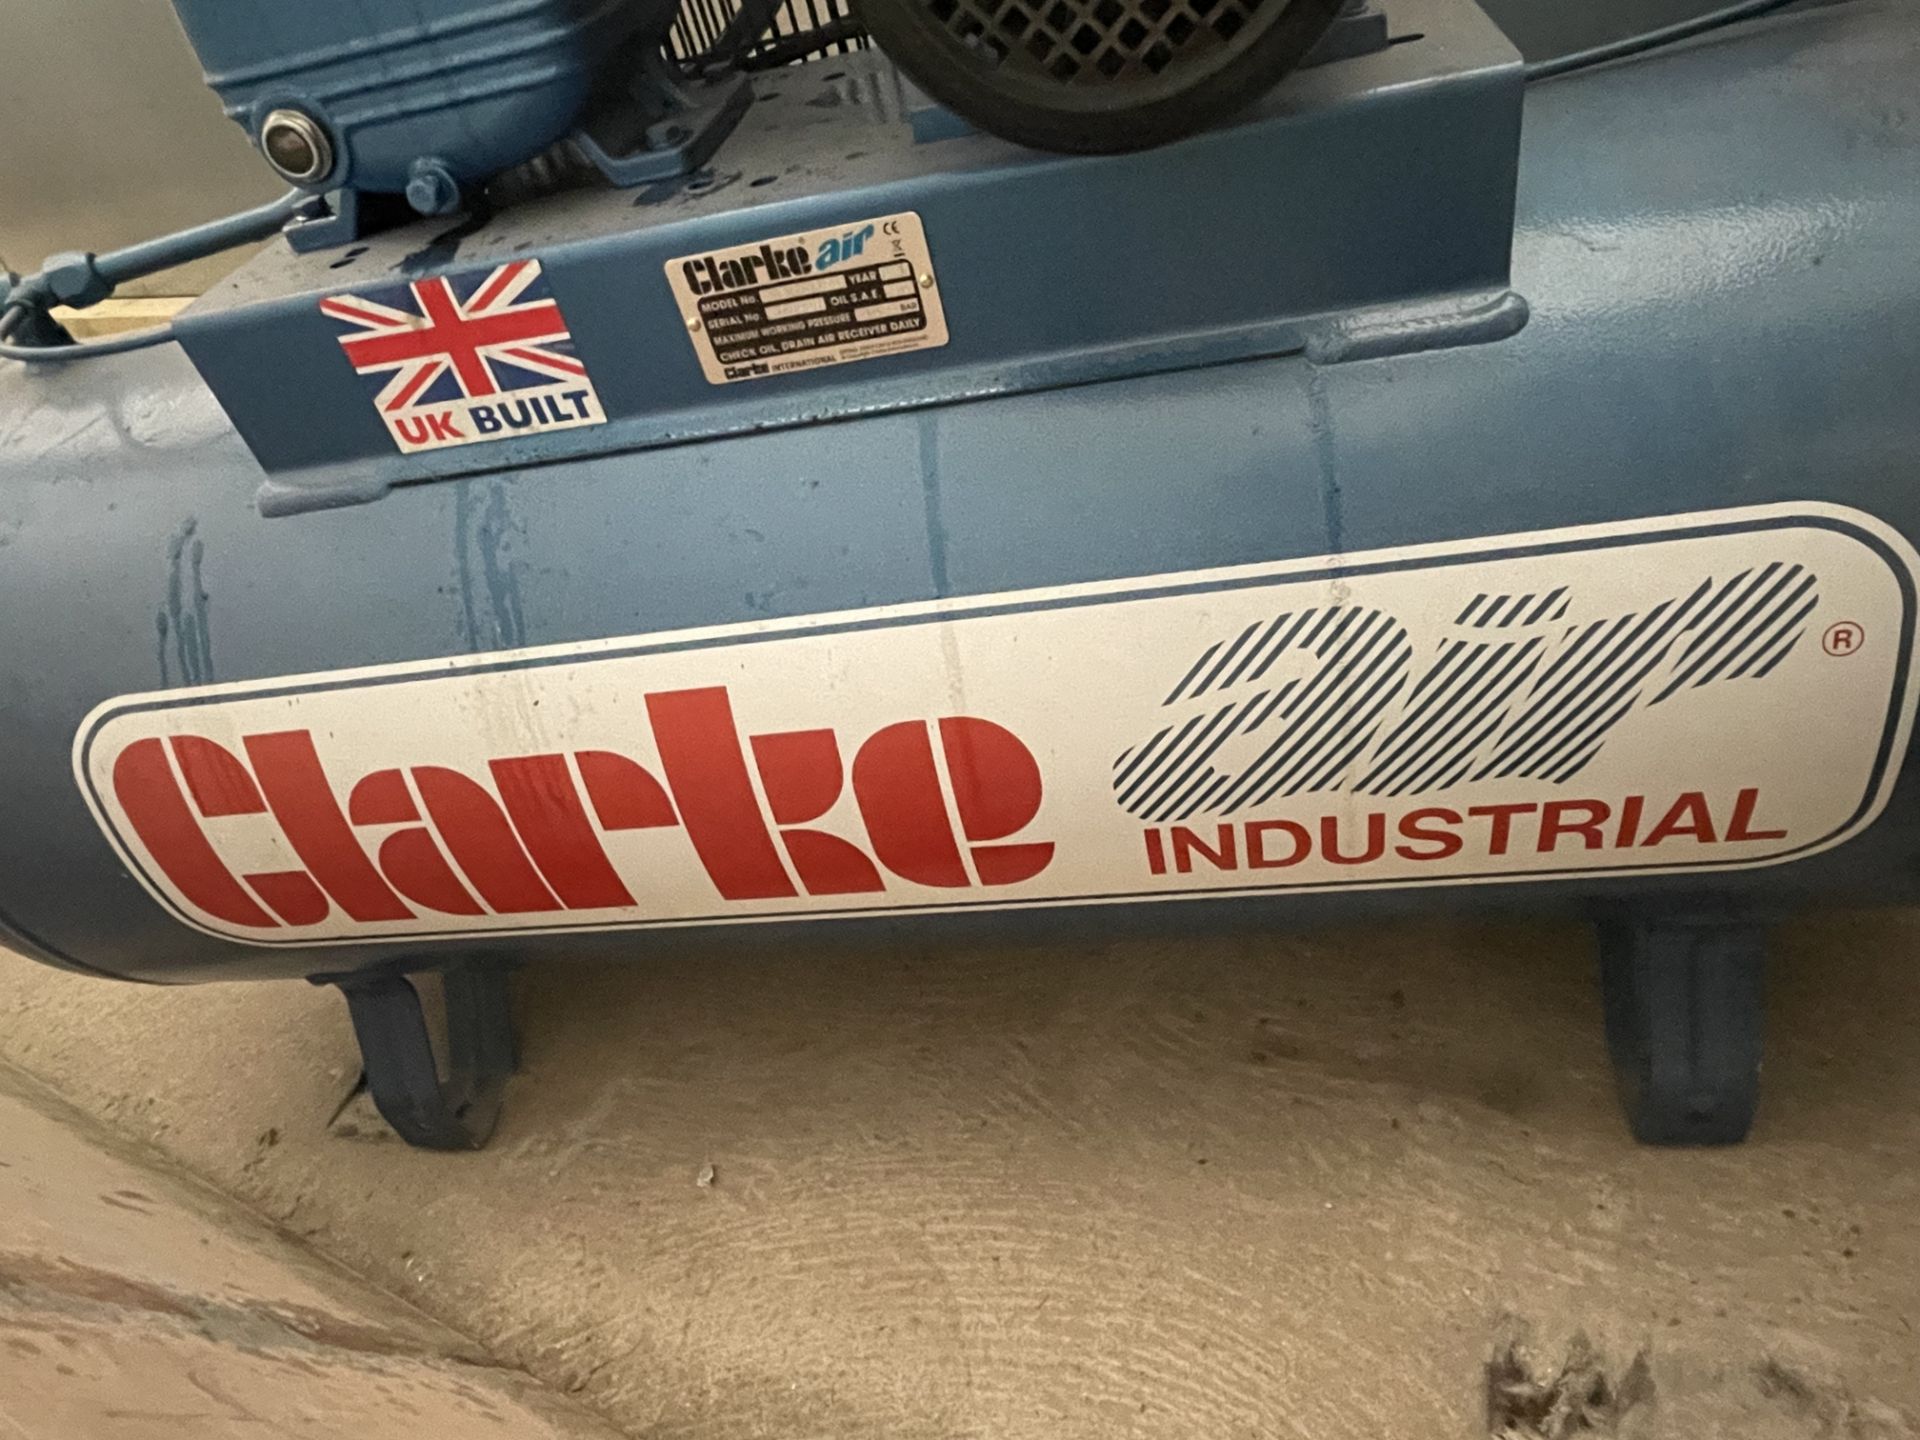 2021 Clarke Air Model XEV16/150 150L 3HP Air Compressor S/No.149926, 240v - Image 2 of 6